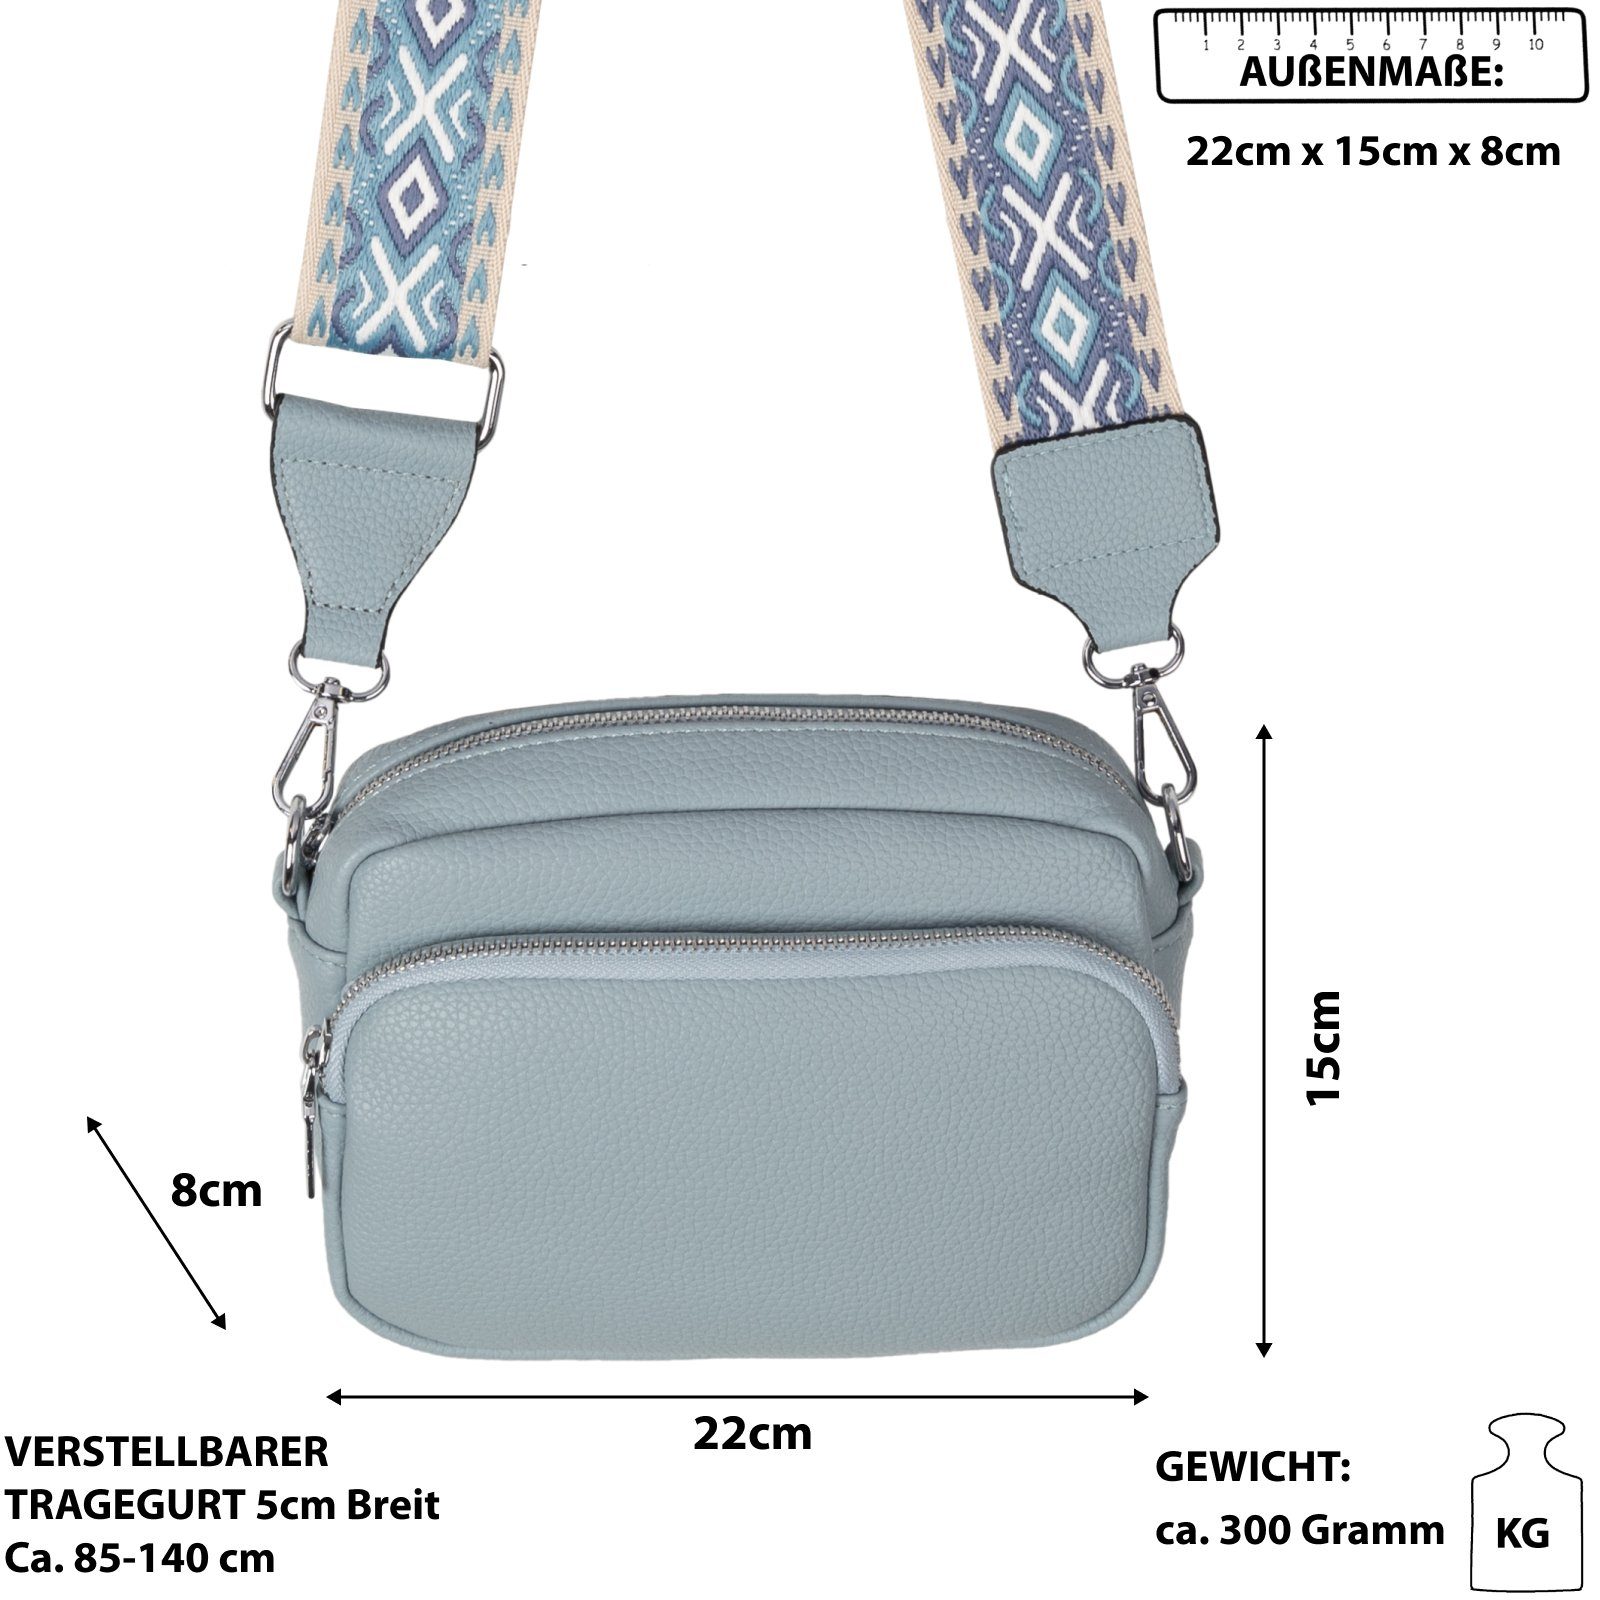 Crossbody-Bag Bauchtasche Schultertasche, L.BLUE Kunstleder als tragbar Gürteltasche Umhängetasche Umhängetasche Hüfttasche Italy-D, EAAKIE CrossOver,